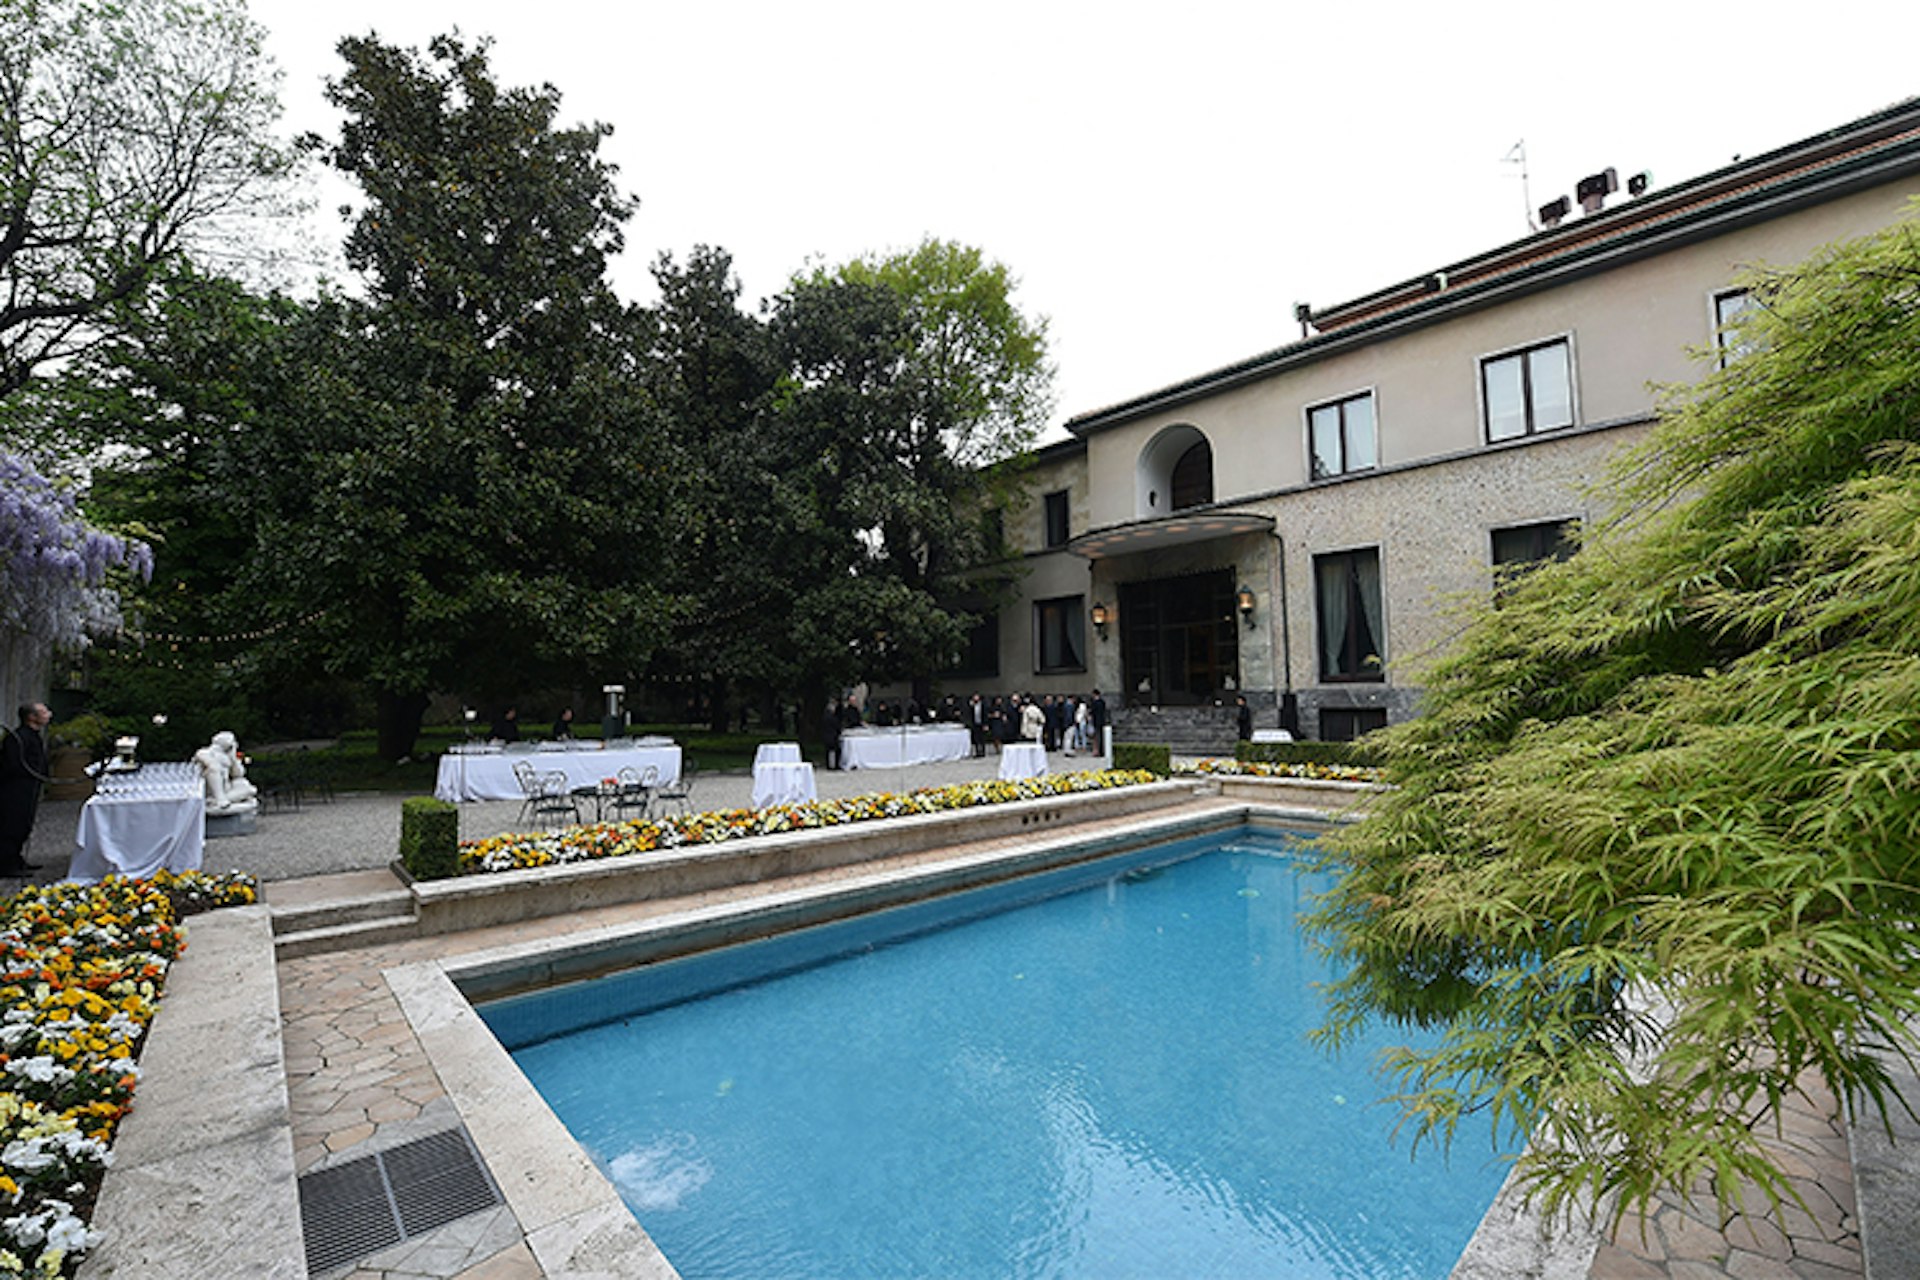 The Villa Necchi in Milan, Italy